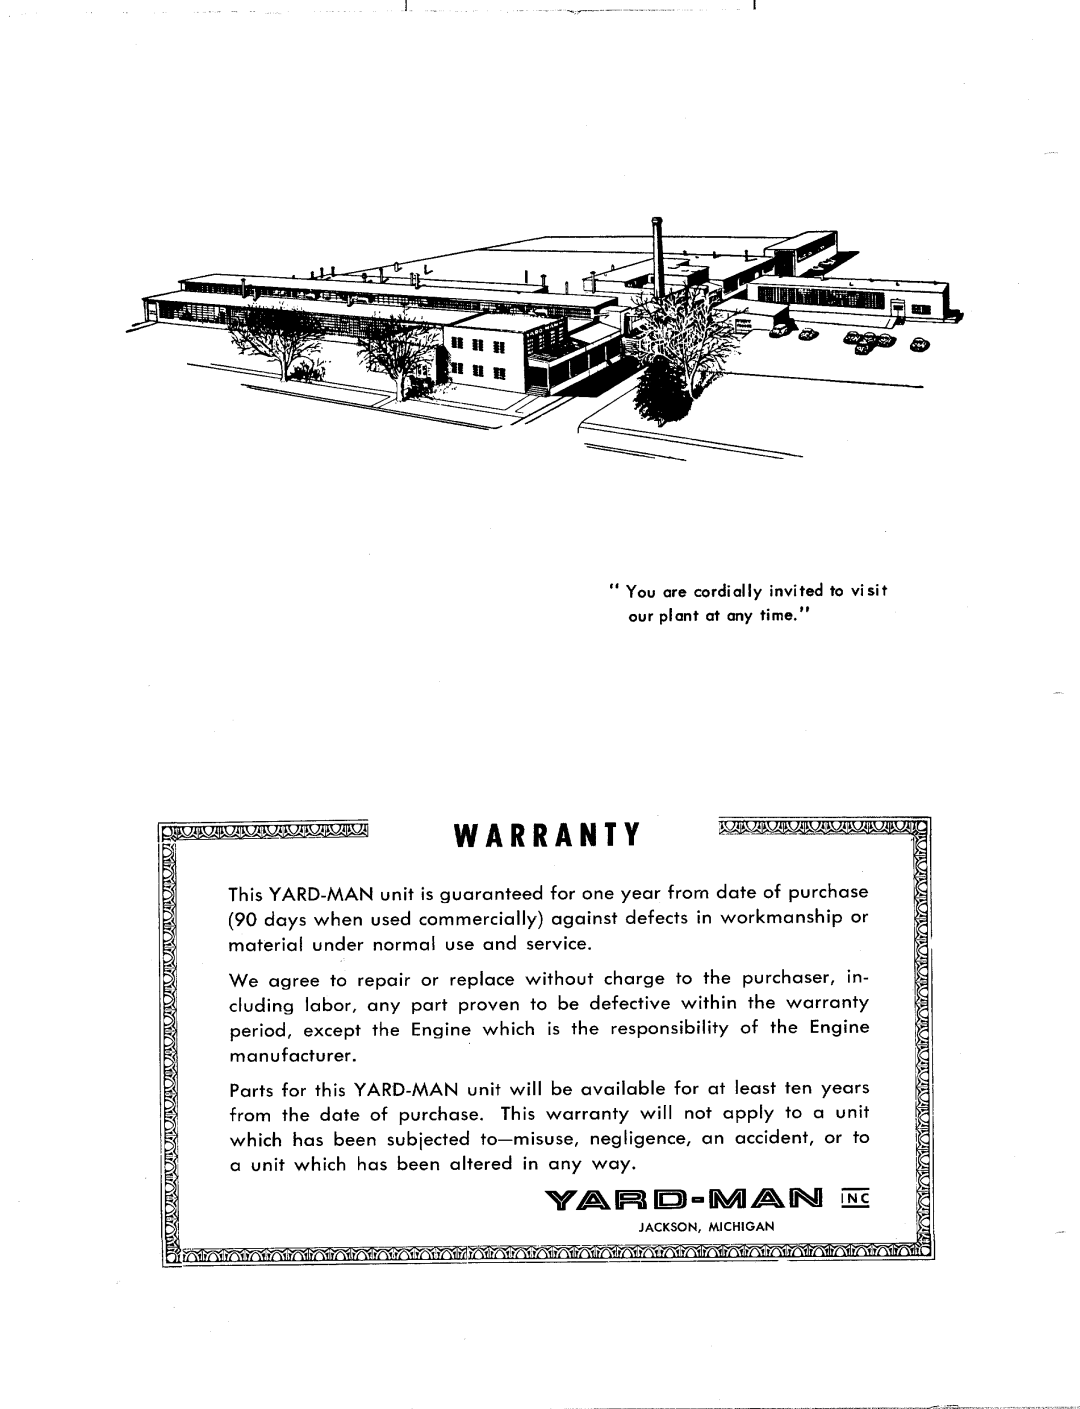 Yard-Man 1040-7 manual 